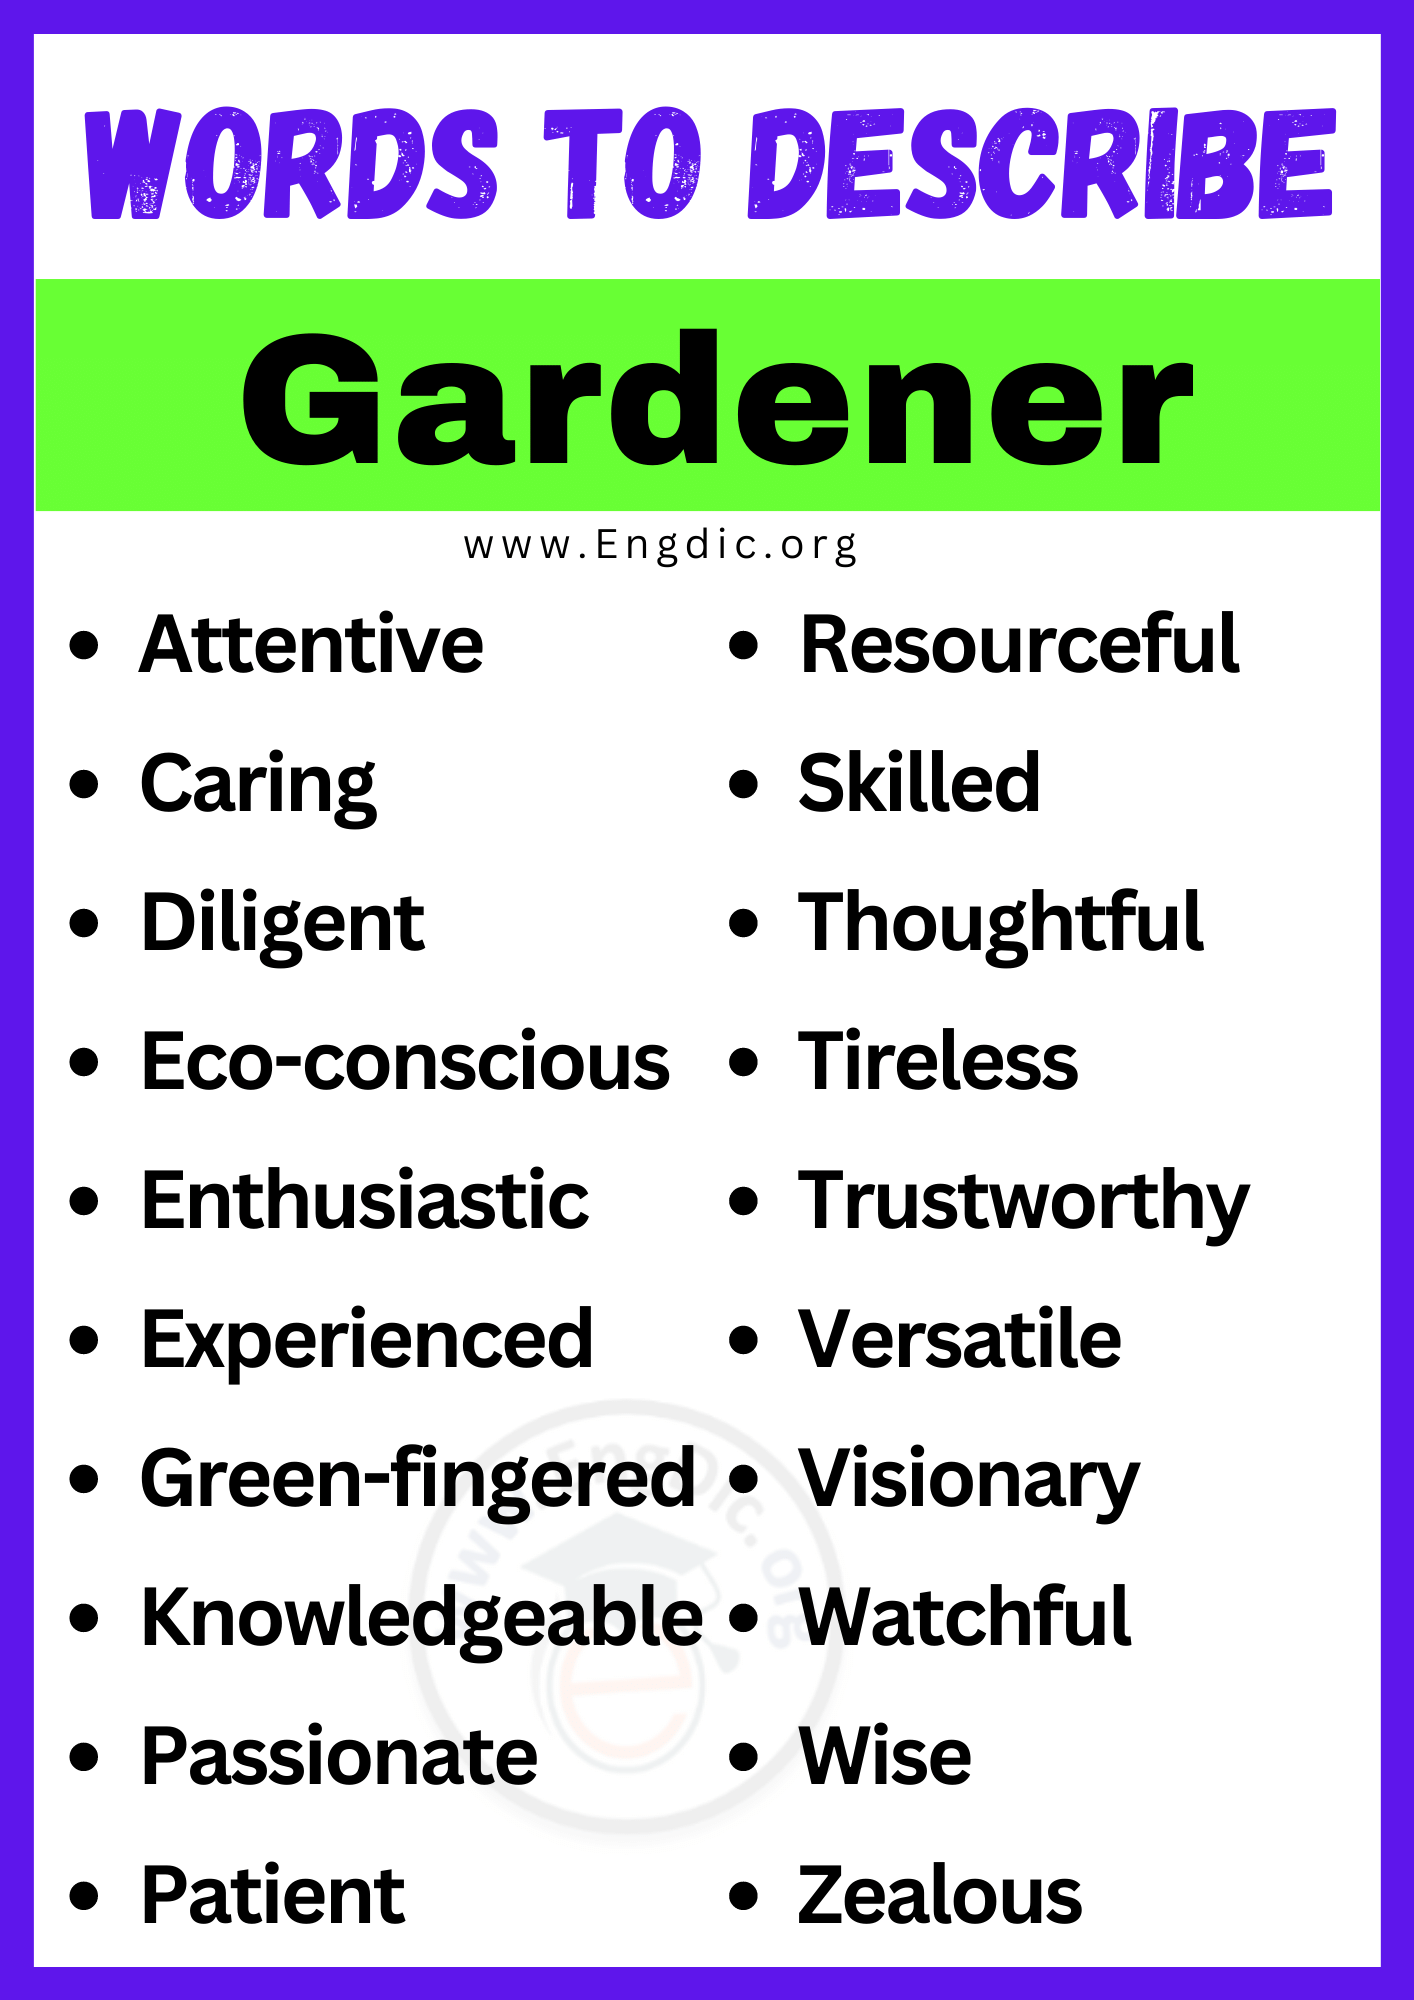 Words to Describe Gardener